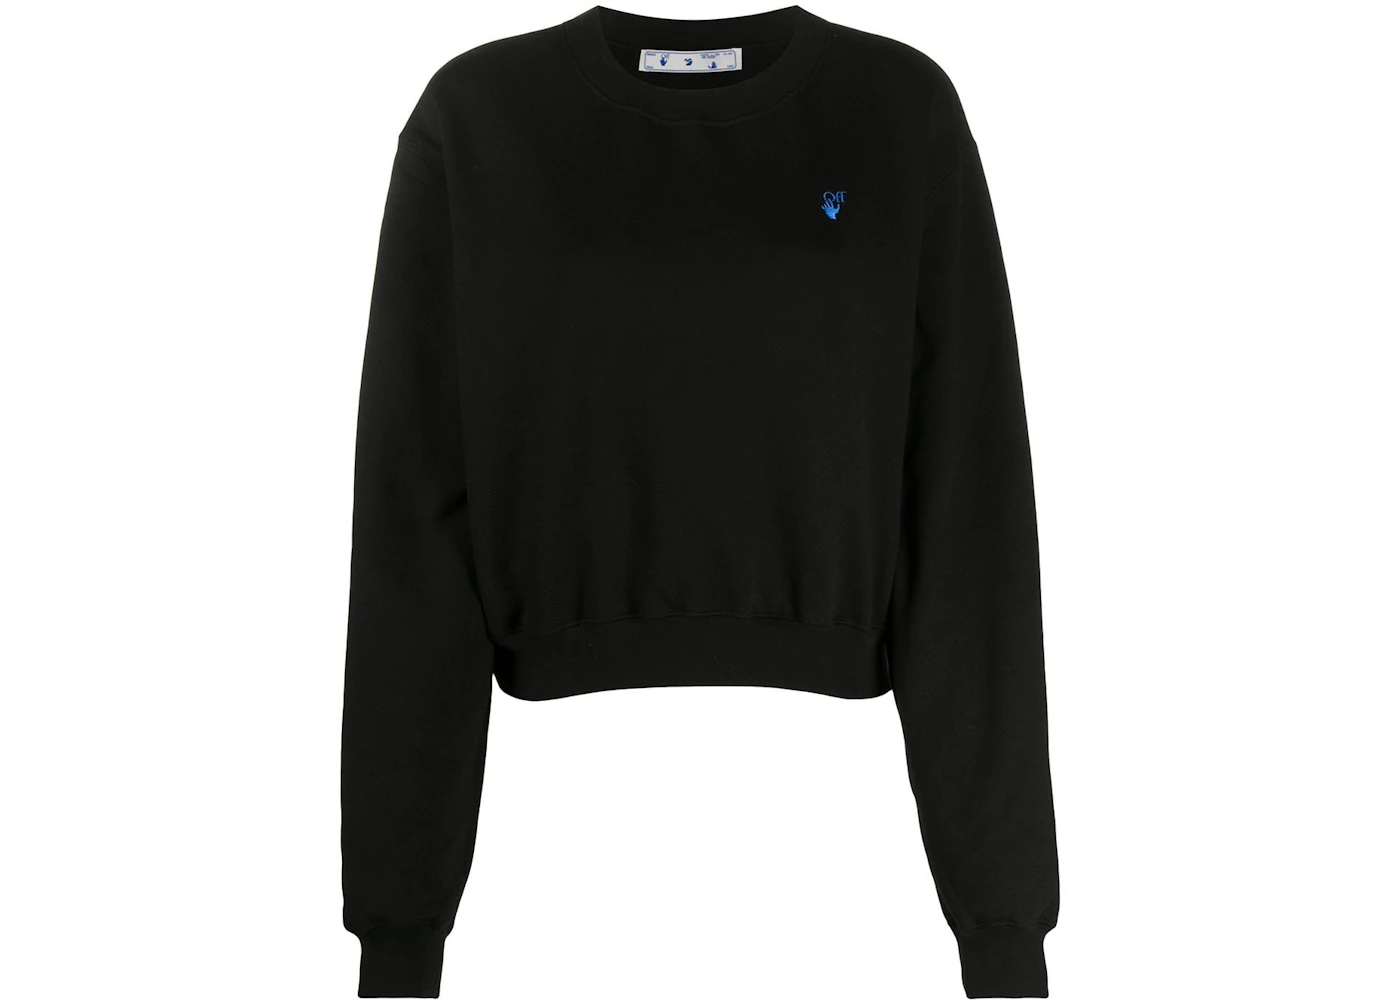 OFF-WHITE Cropped Embroidered Logo Sweatshirt Black/Blue - US